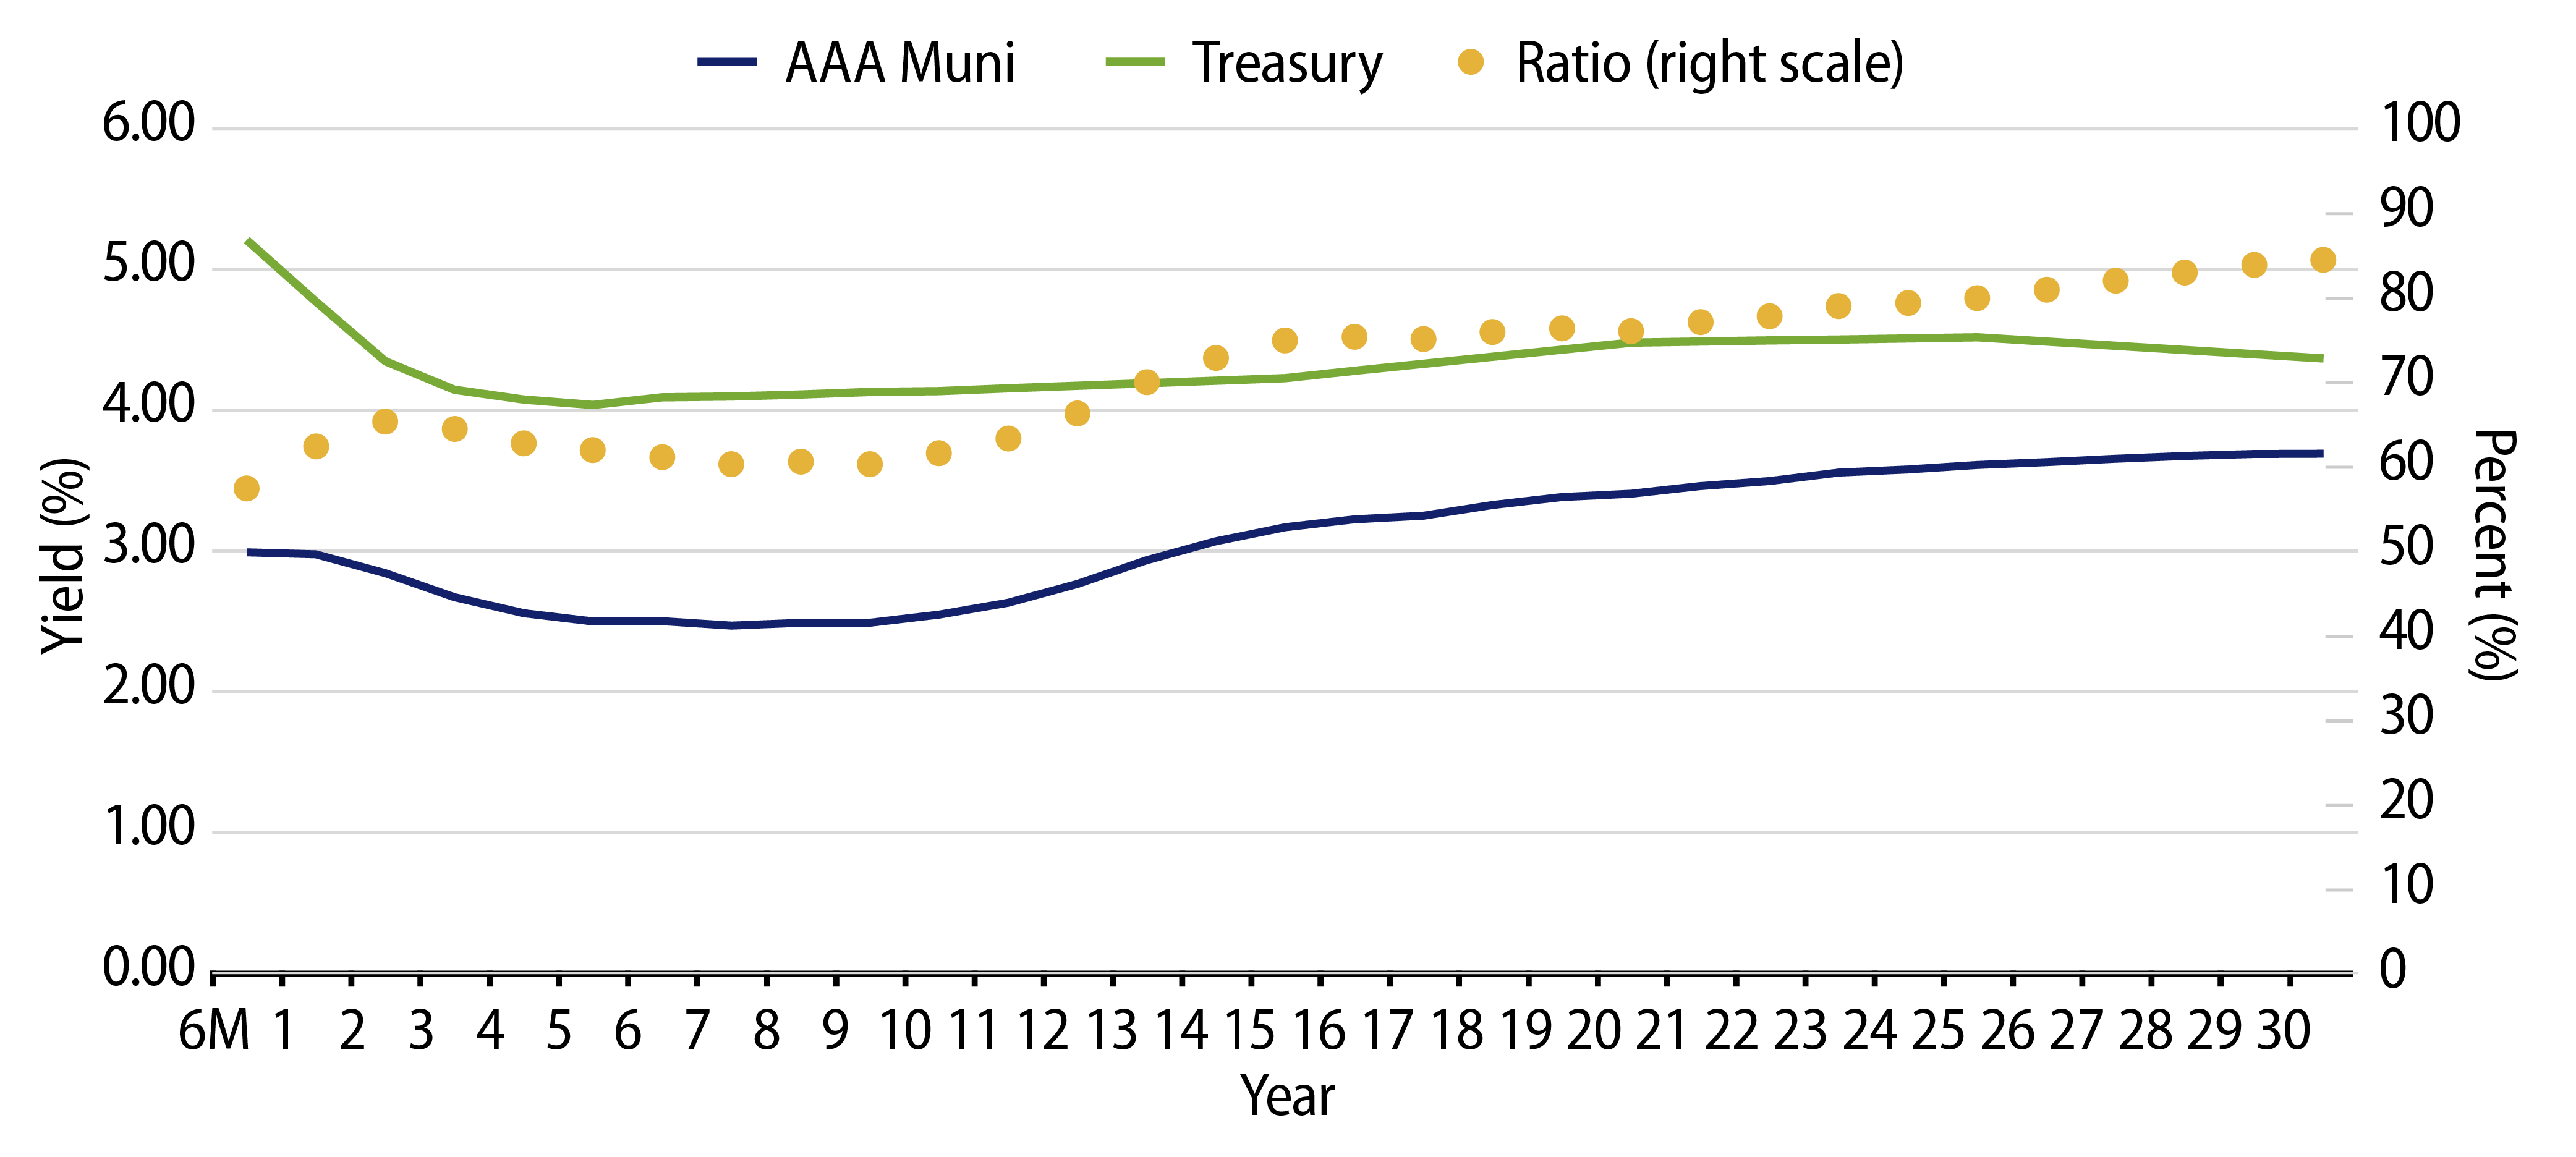 AAA Municipal vs. Treasury Yield Curves 